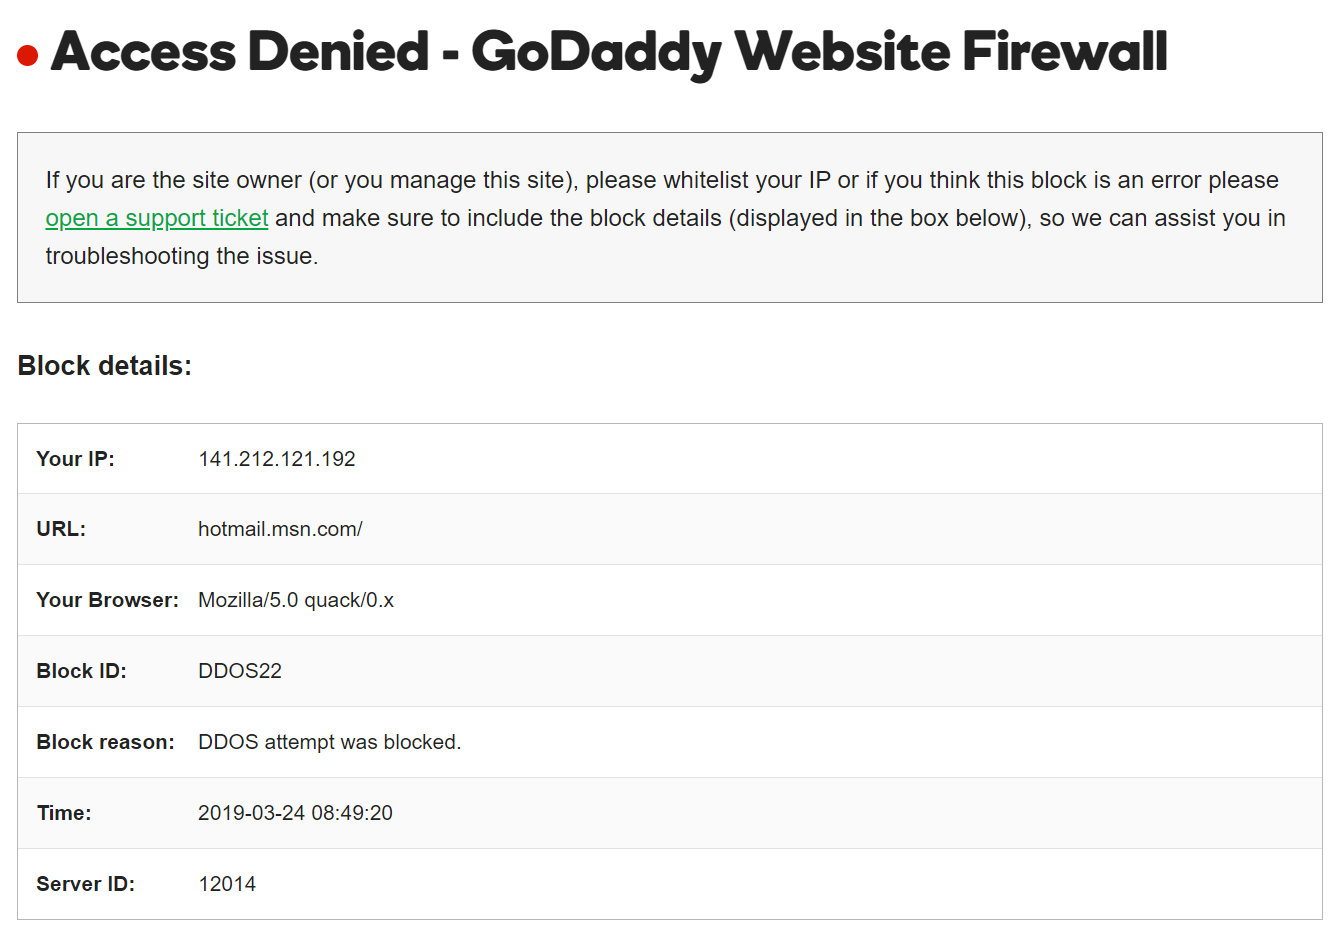 Screen shot showing GoDaddy website firewall details